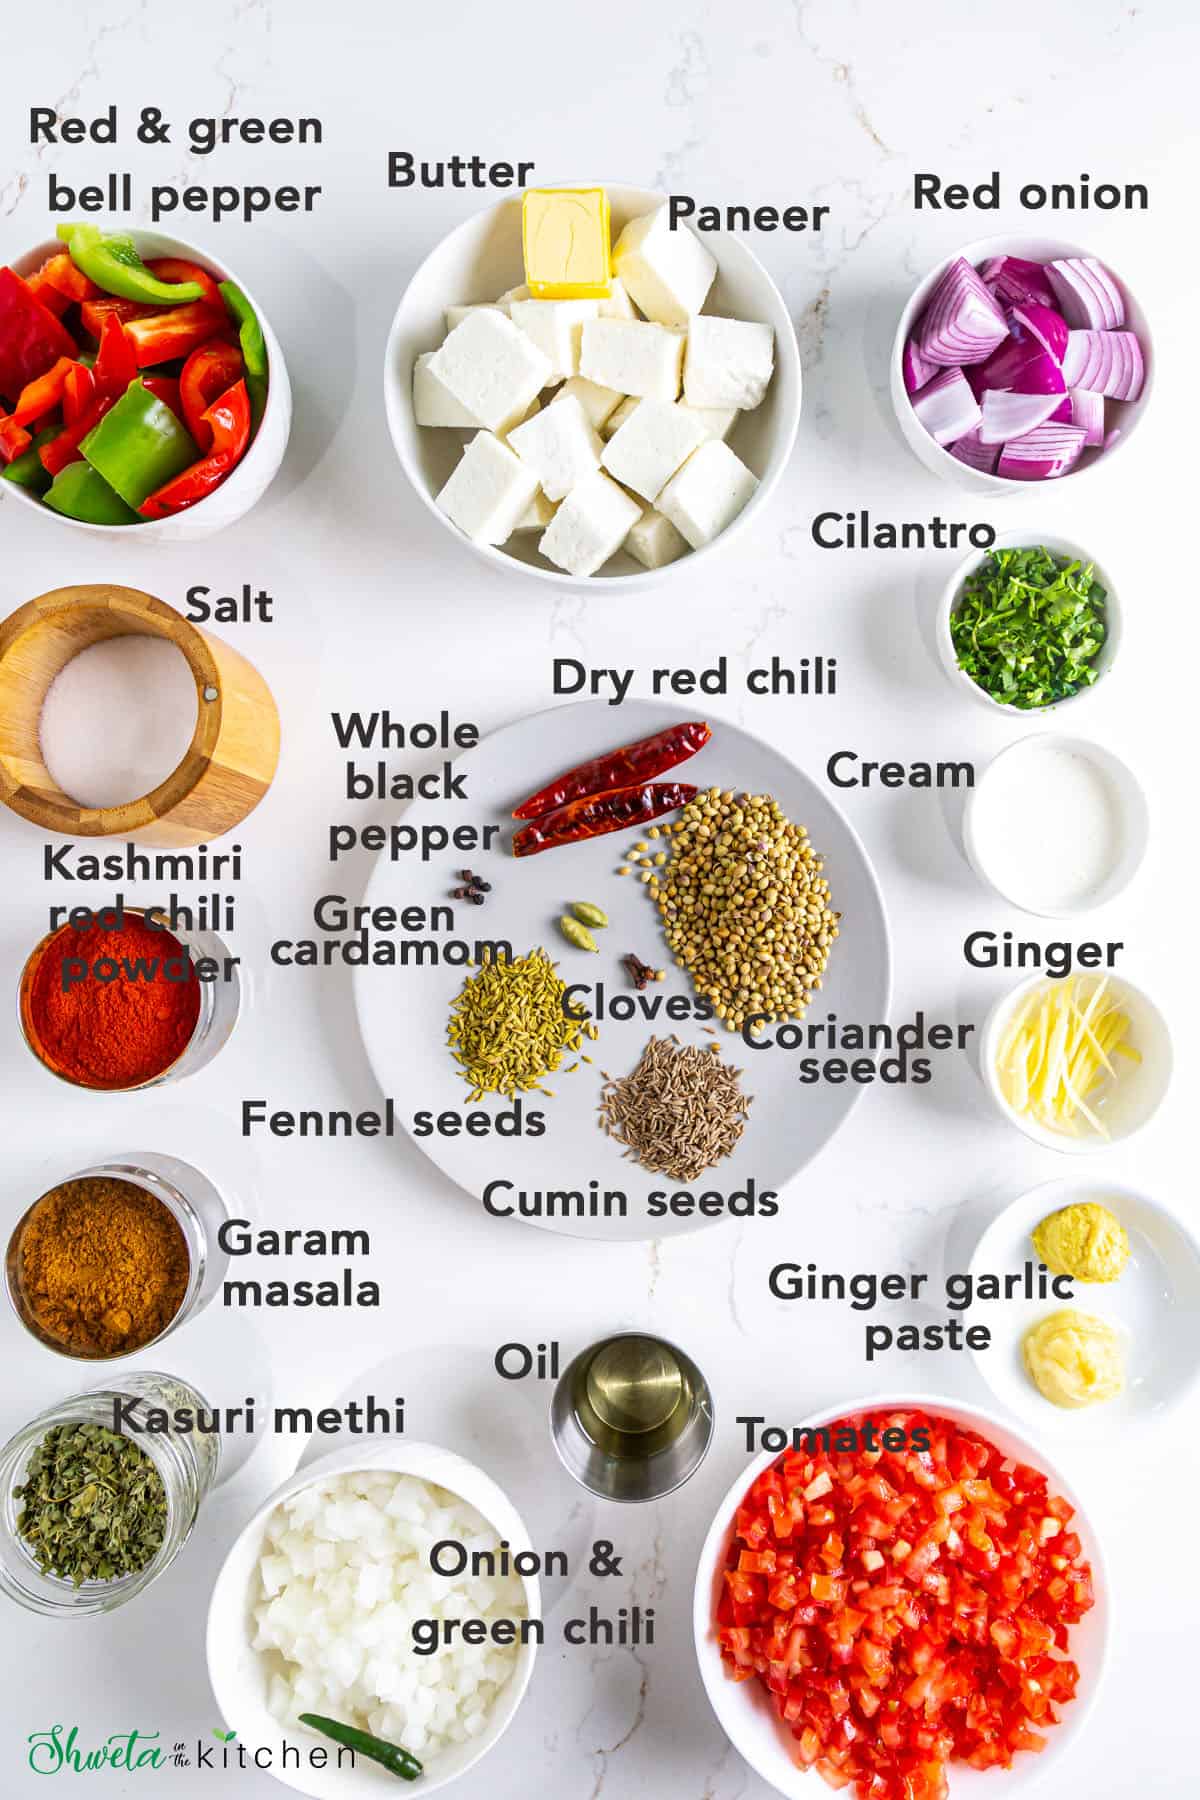 Ingredients for kadai paneer recipe arranged in bowls on white surface